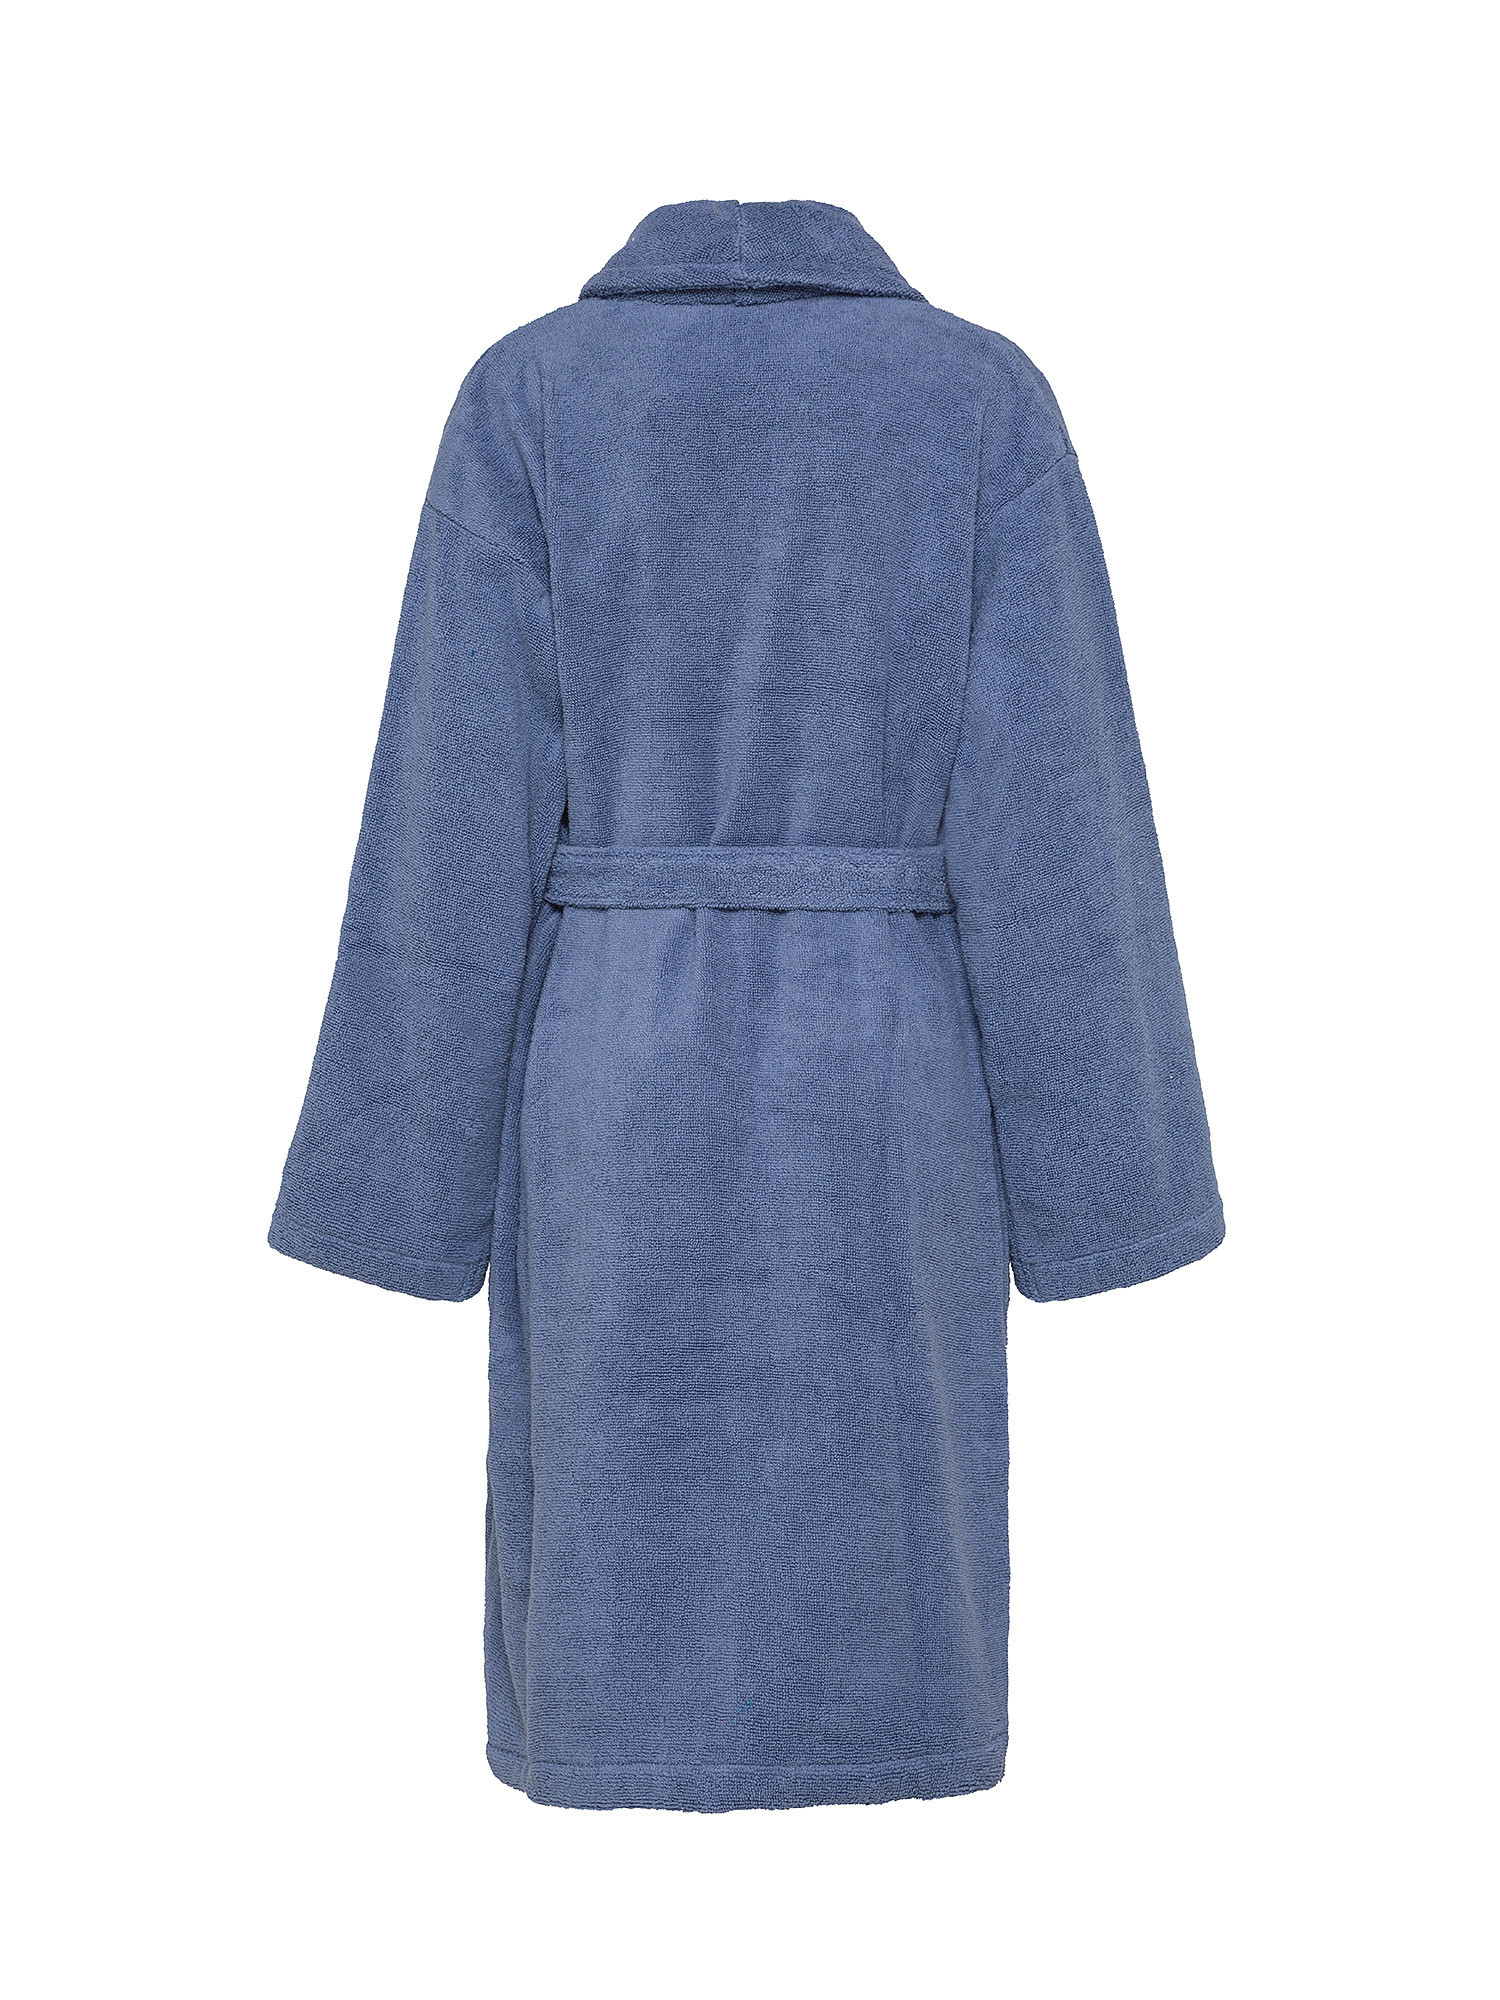 Thermae premium quality cotton bathrobe, Blue, large image number 1